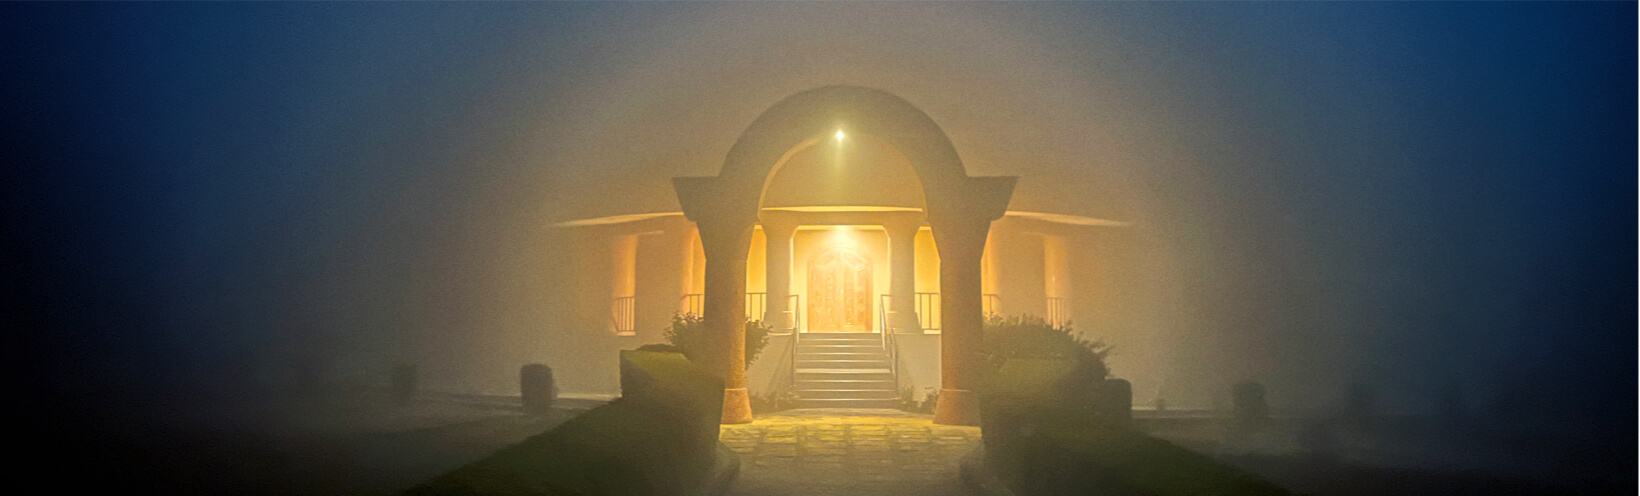 khajuarho shrine night foggy banner - Himalayan Institute